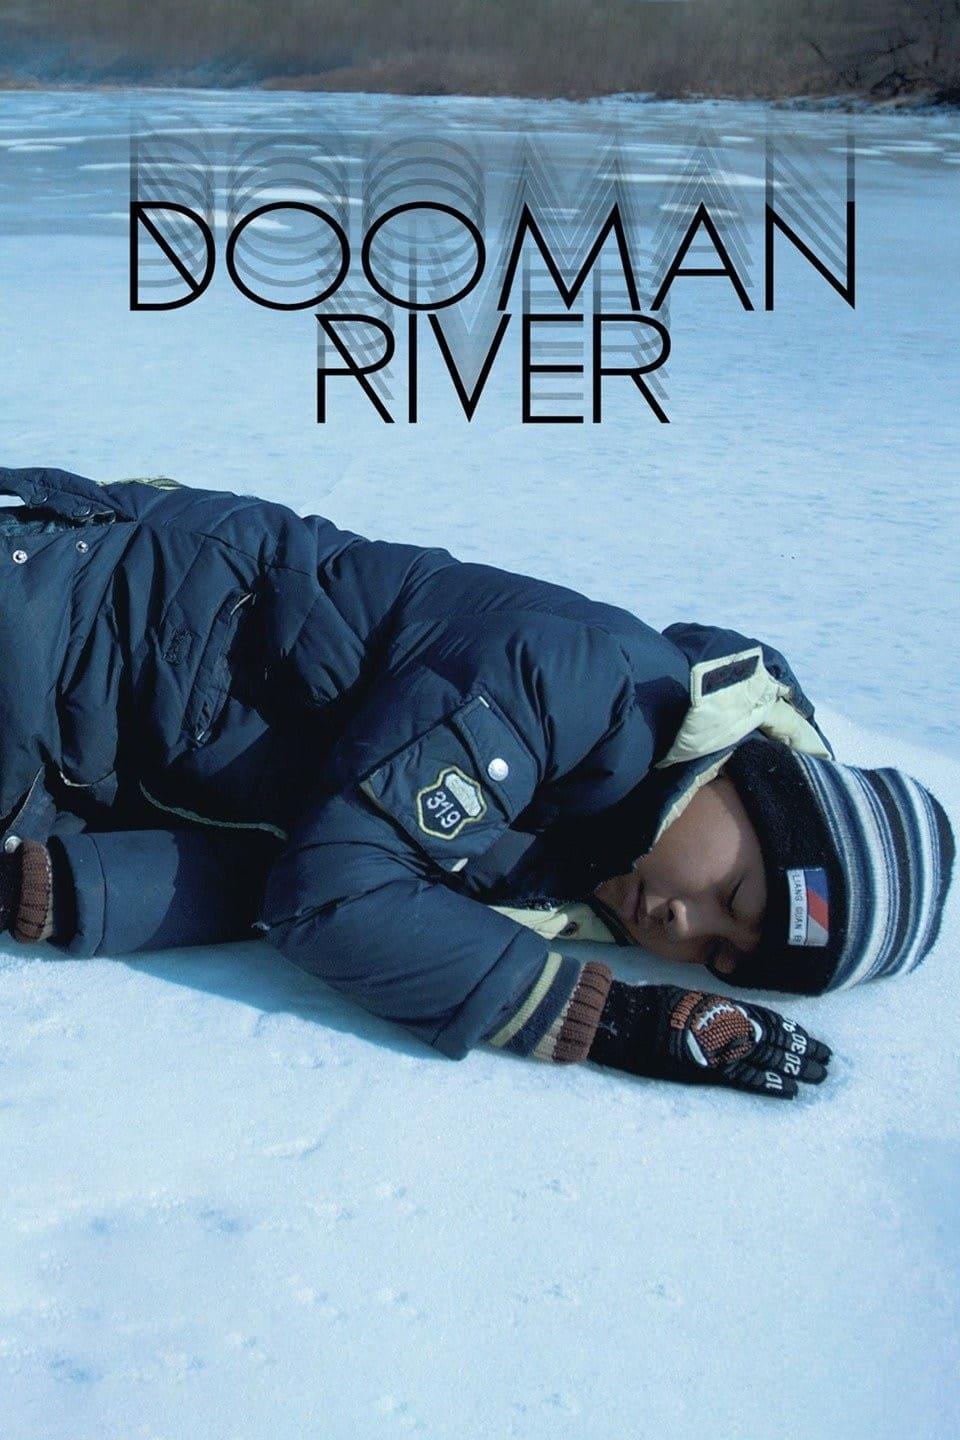 Dooman River poster